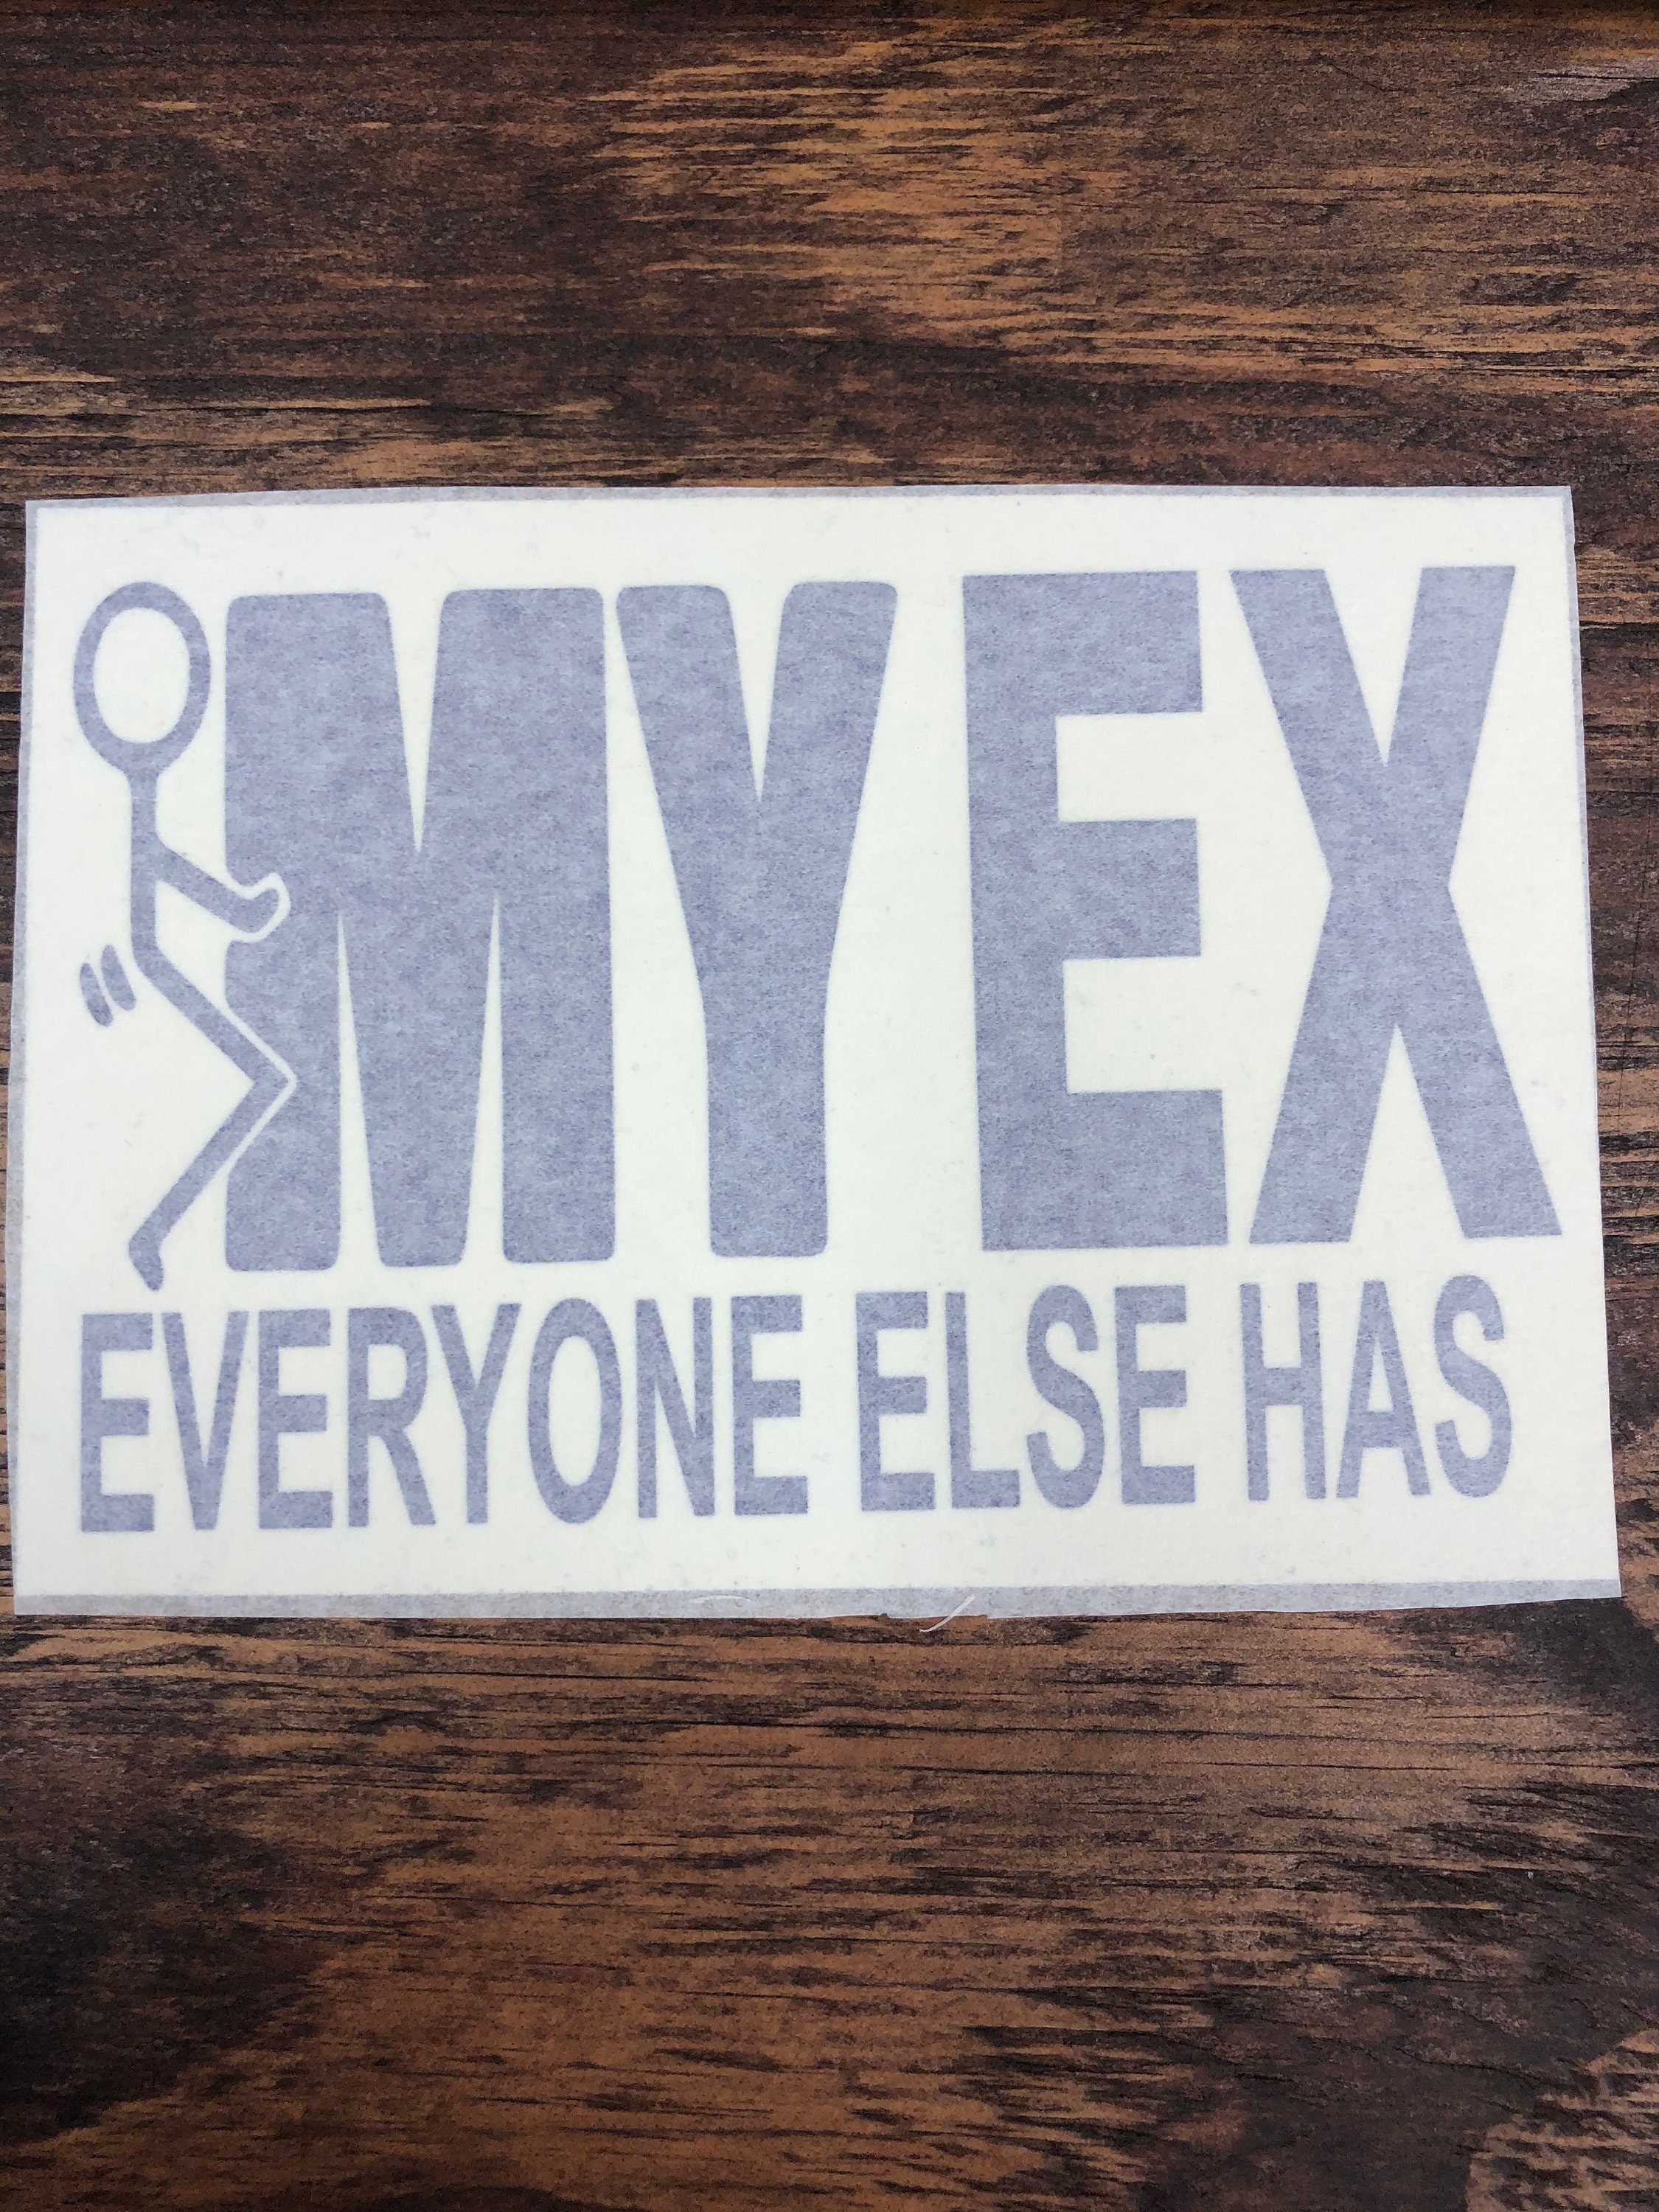 pee on ex wife sticker